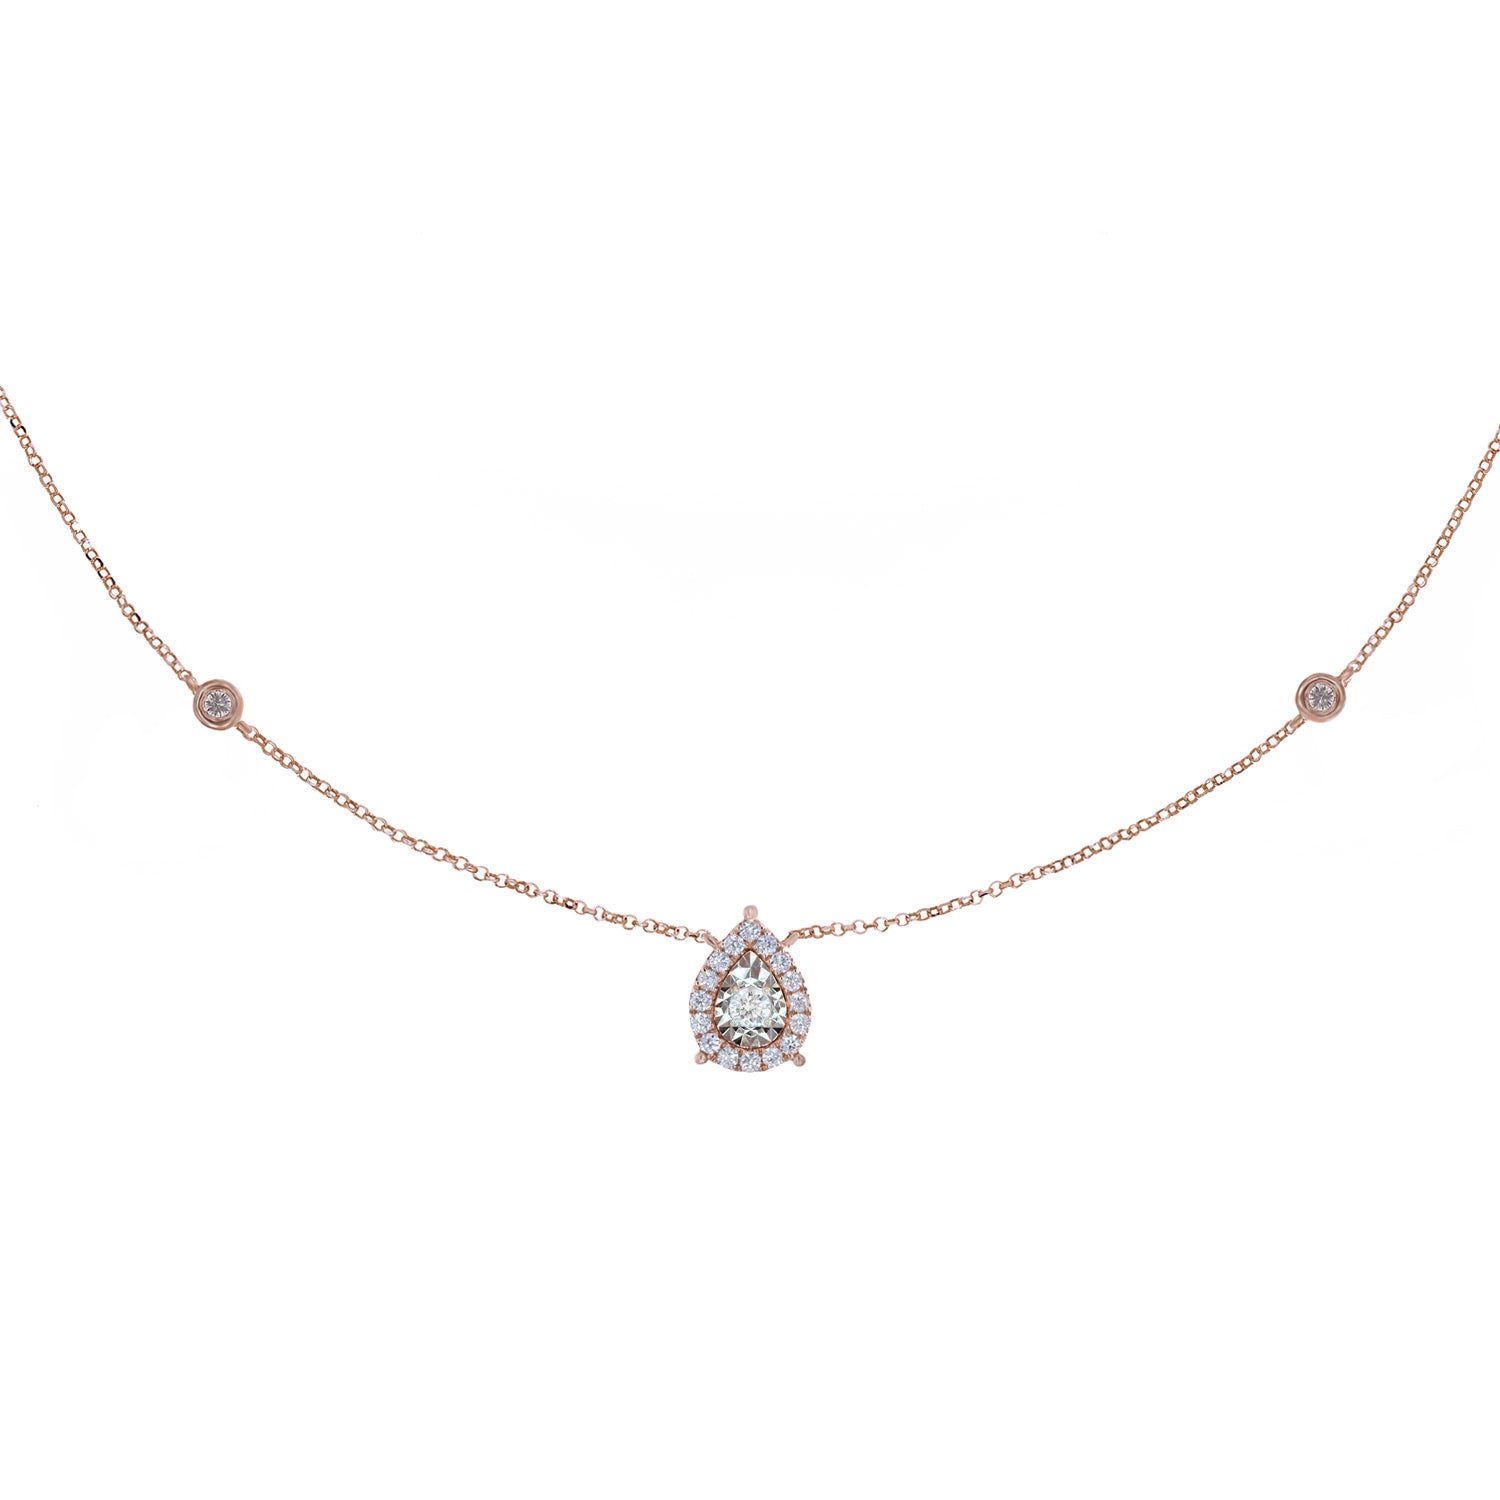 Diamond necklace. Pear shaped diamond necklace. Rose gold necklace